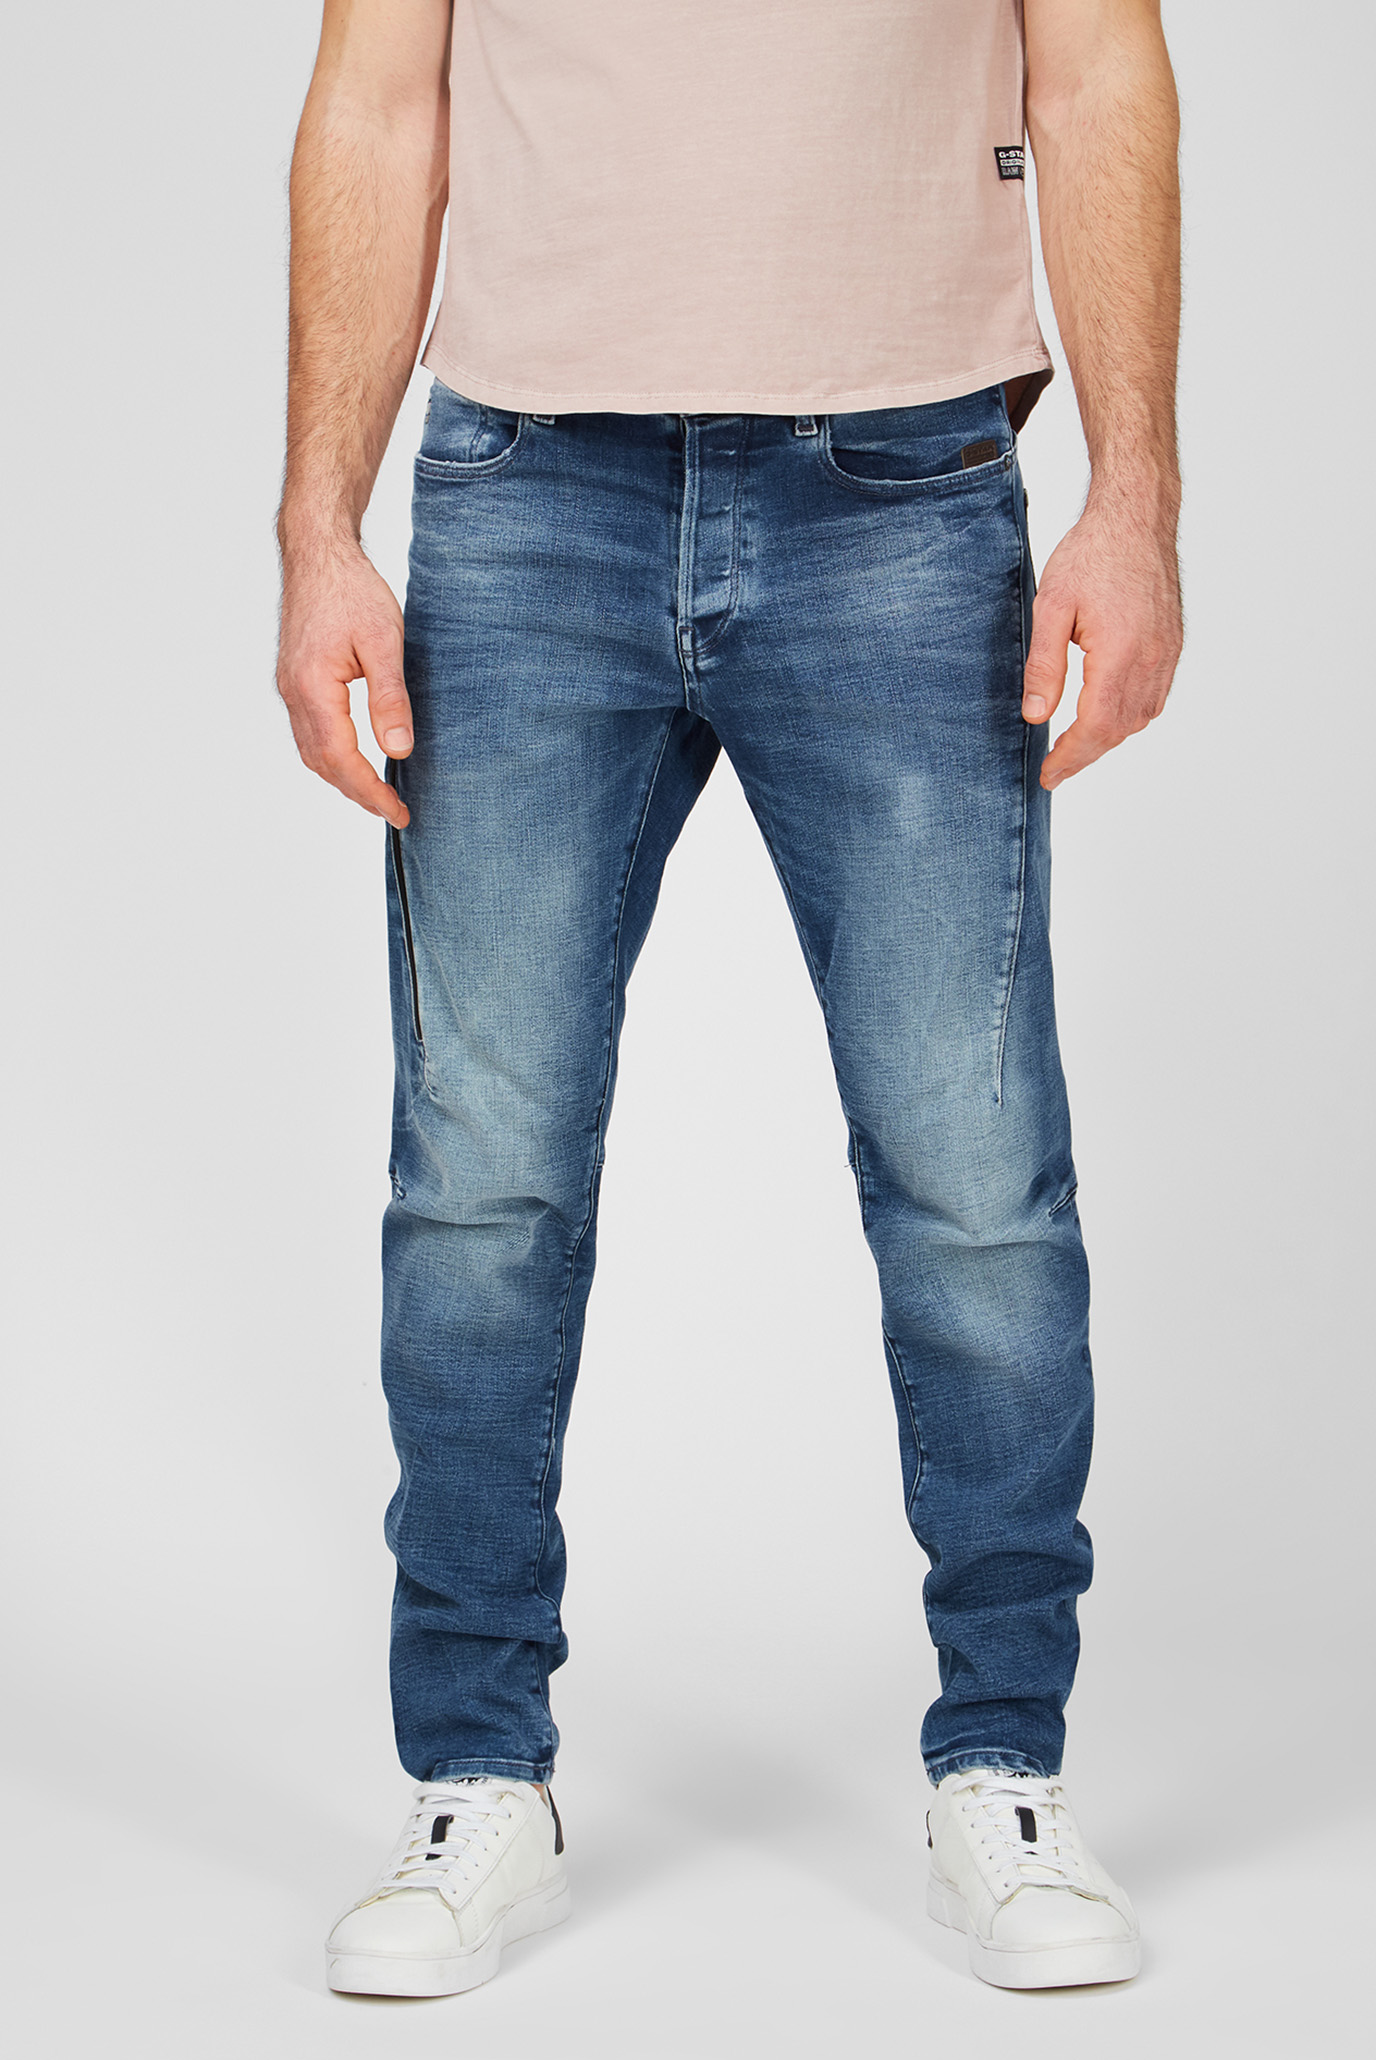 Чоловічі сині джинси Citishield 3D Slim Tapered 1